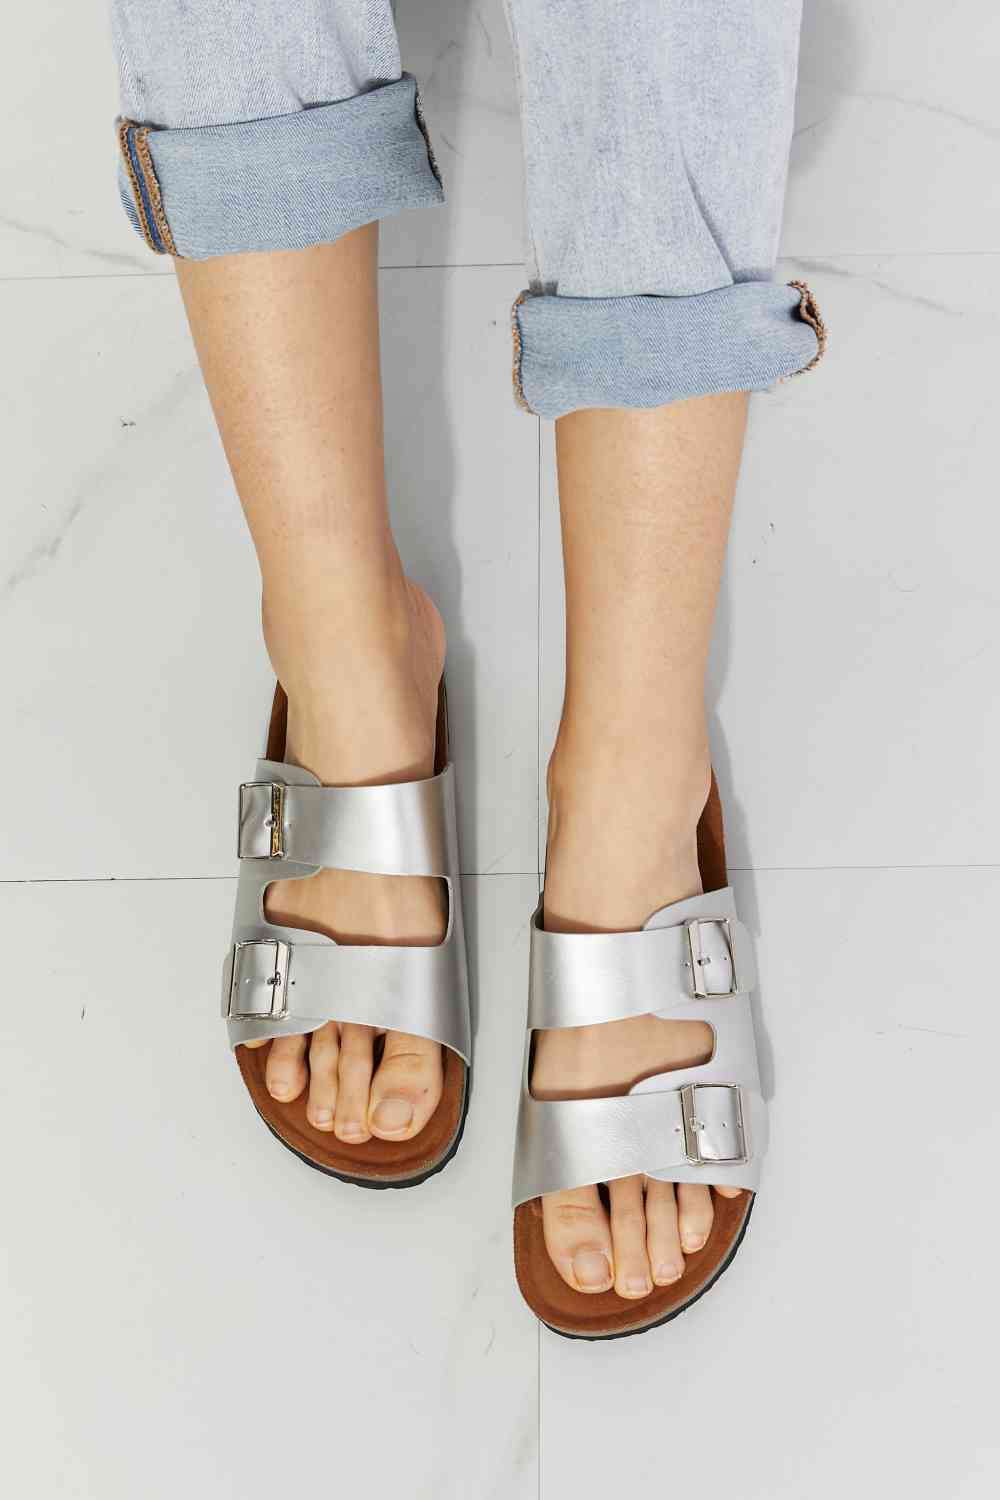 MMShoes Best Life Double-Banded Slide Sandal in Silver - Opulence & Essence